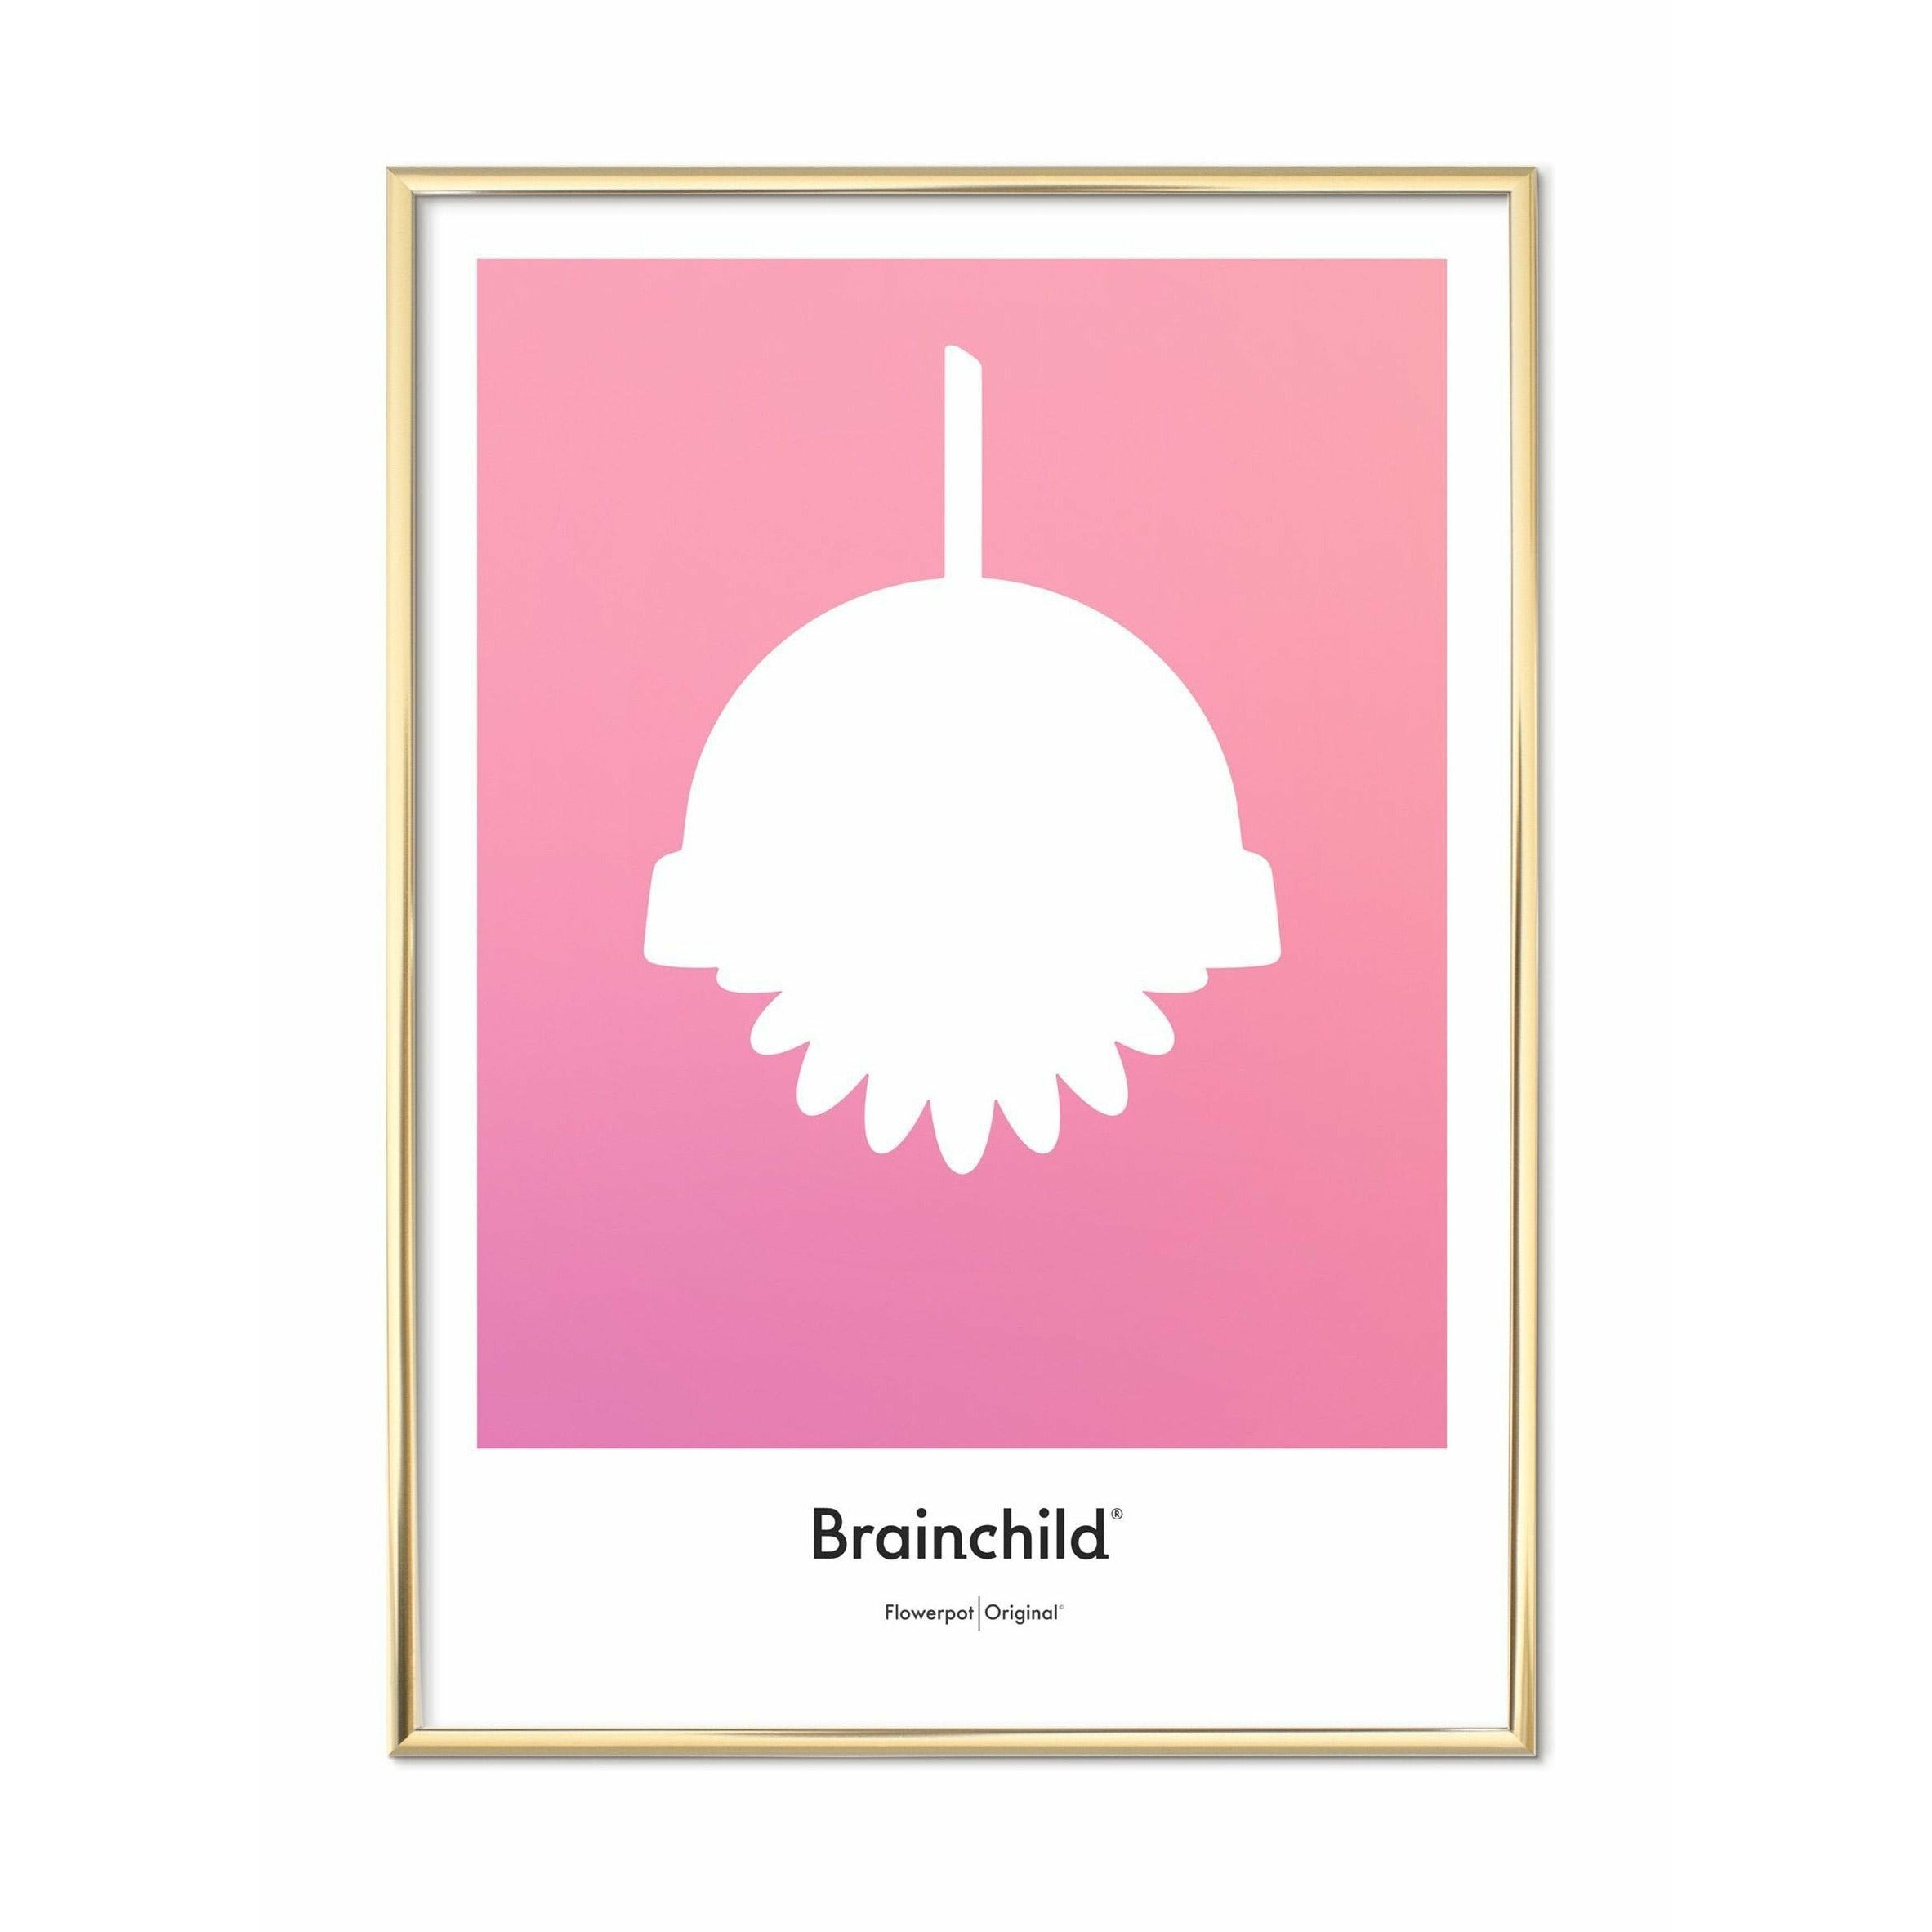 Brainchild Flowerpot Design Icon Poster, Brass Colored Frame 30 X40 Cm, Pink